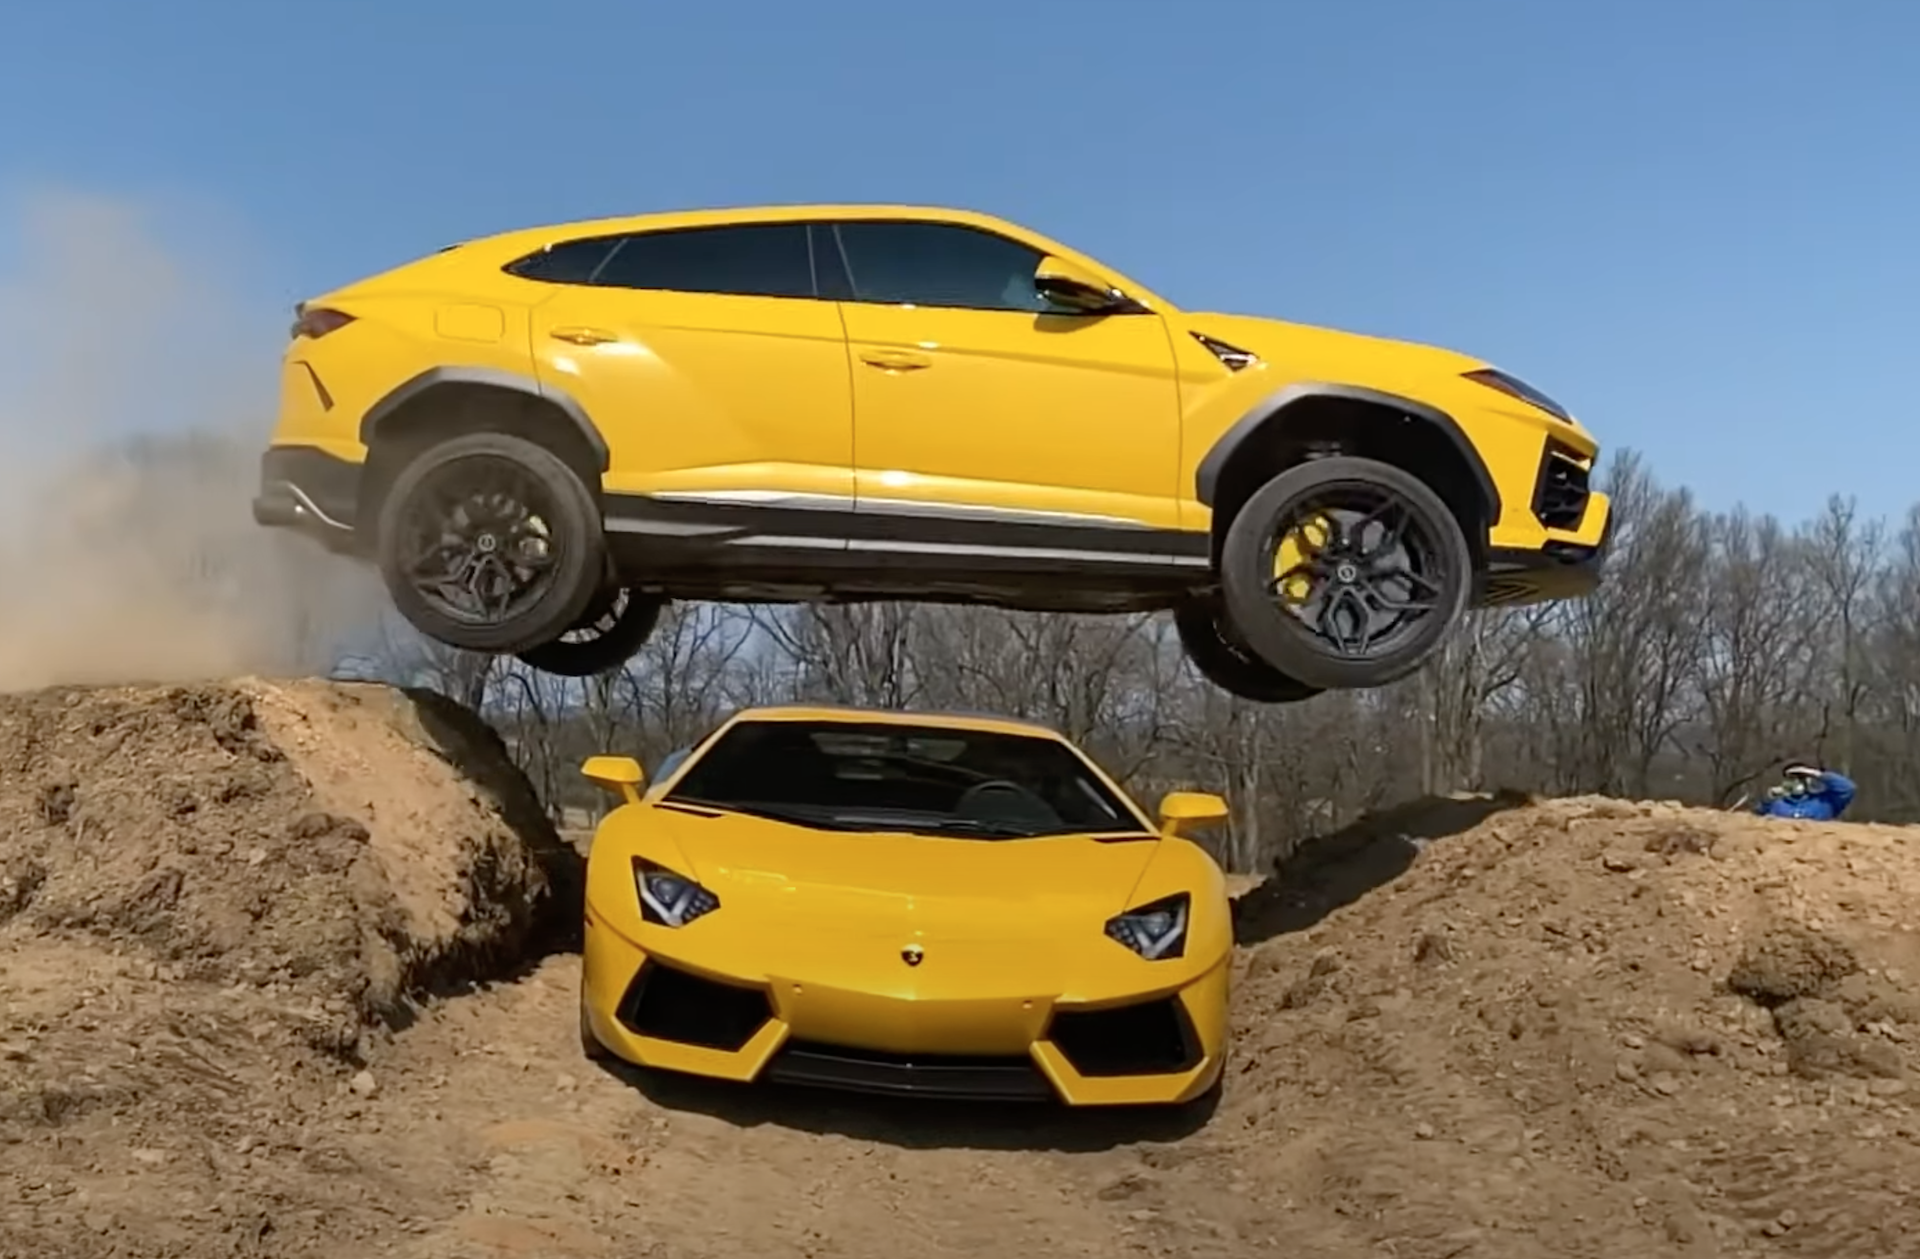 An image of a yellow Lamborghini Urus jumping over an Aventador.